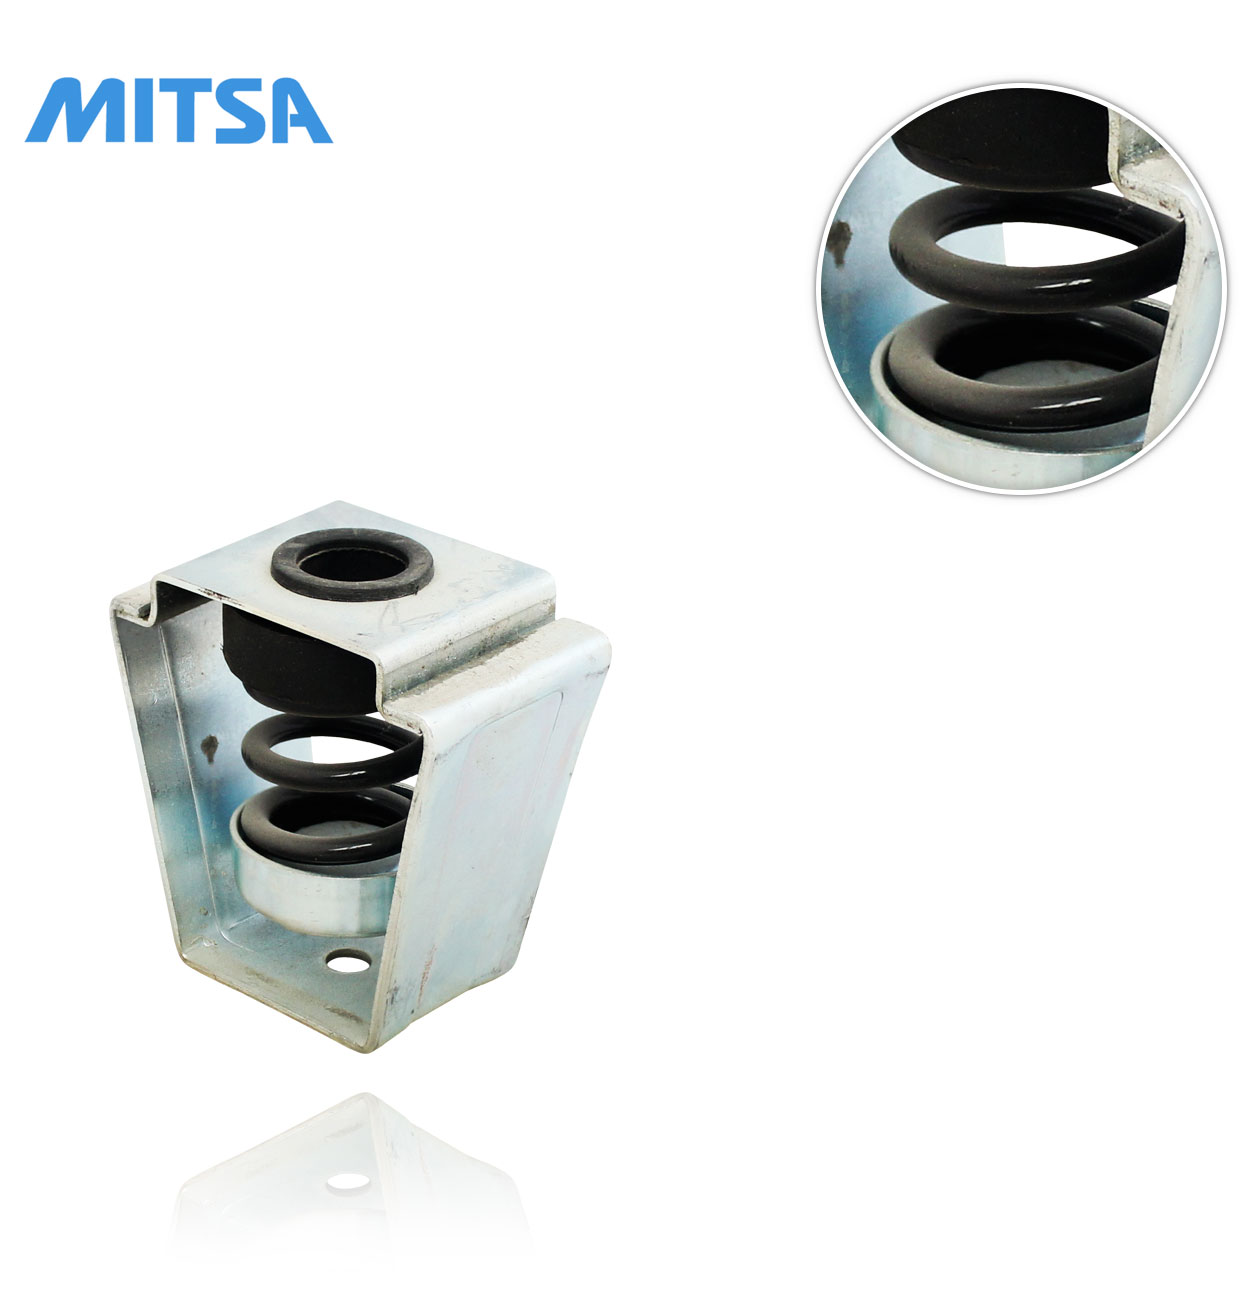 TM 100 MITSA ANTI-VIBRATION ISOLATOR